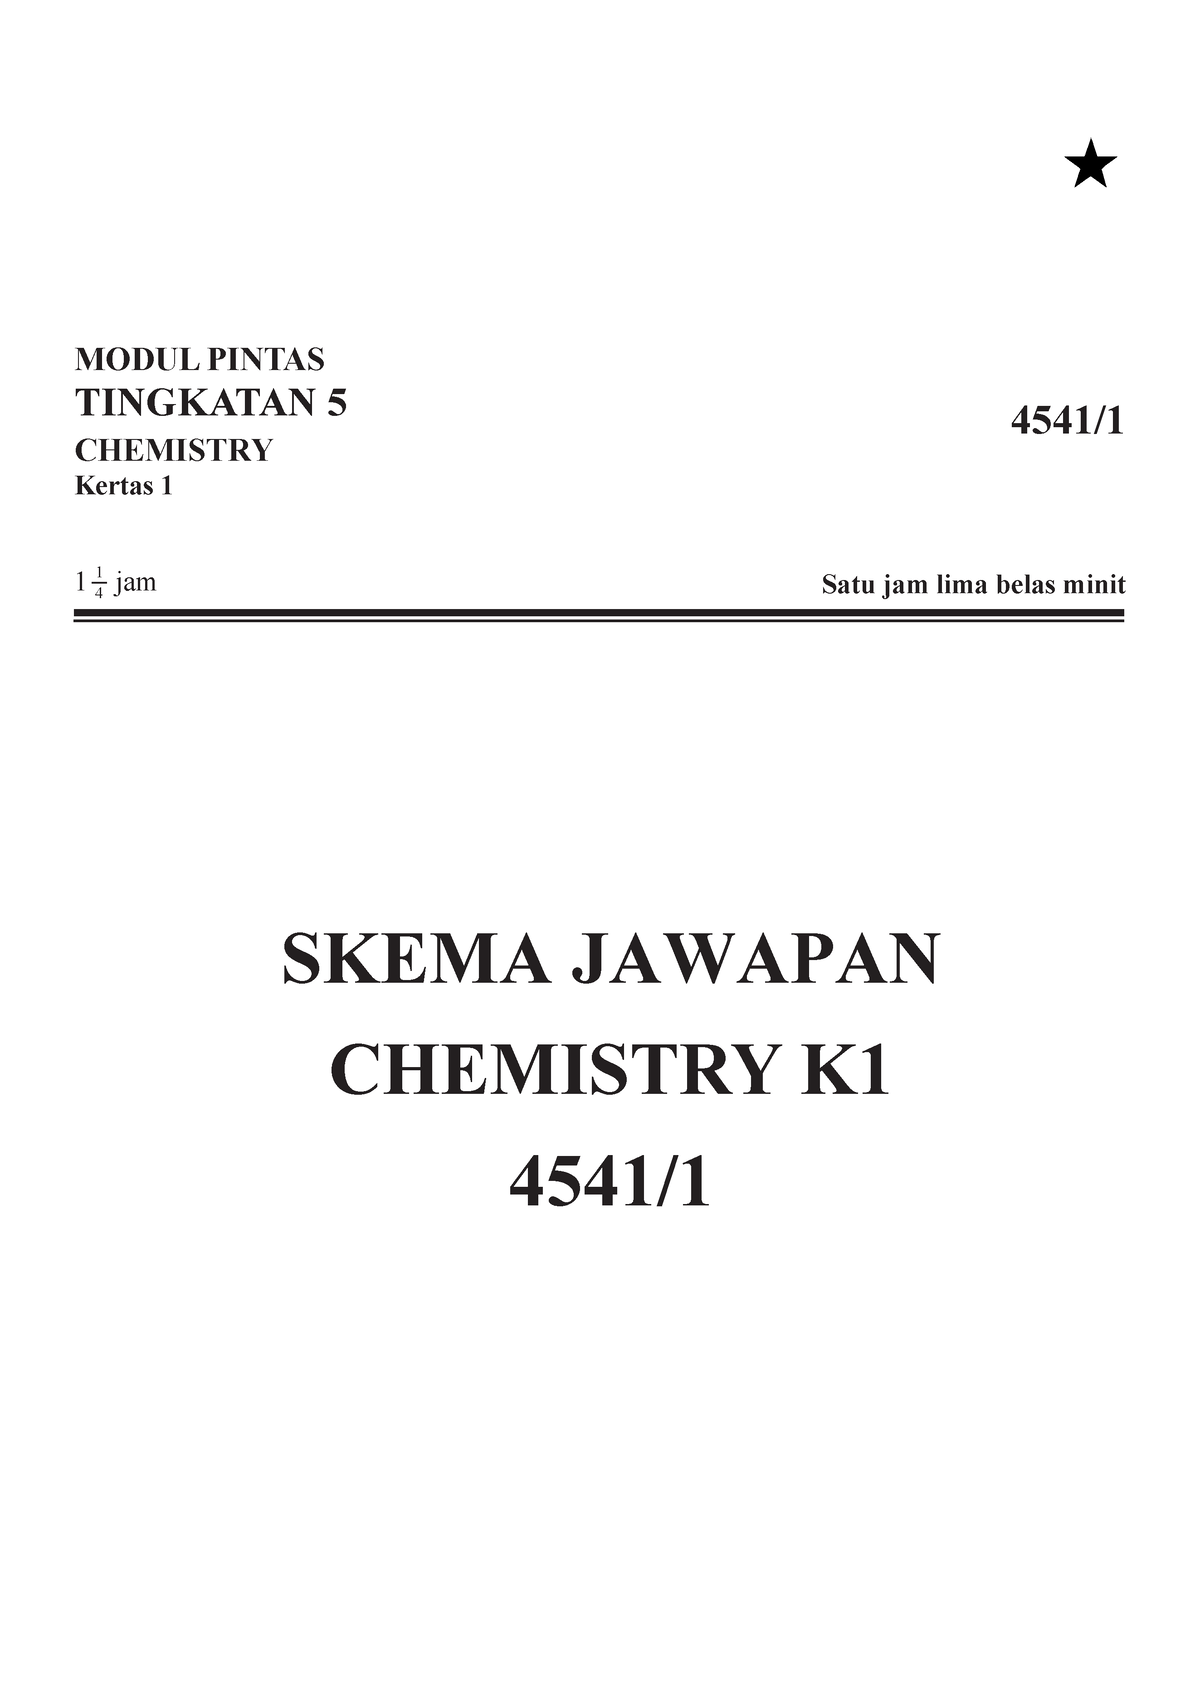 Chemistry K1  Science  Satu jam lima belas minit 4541/ 14 MODUL